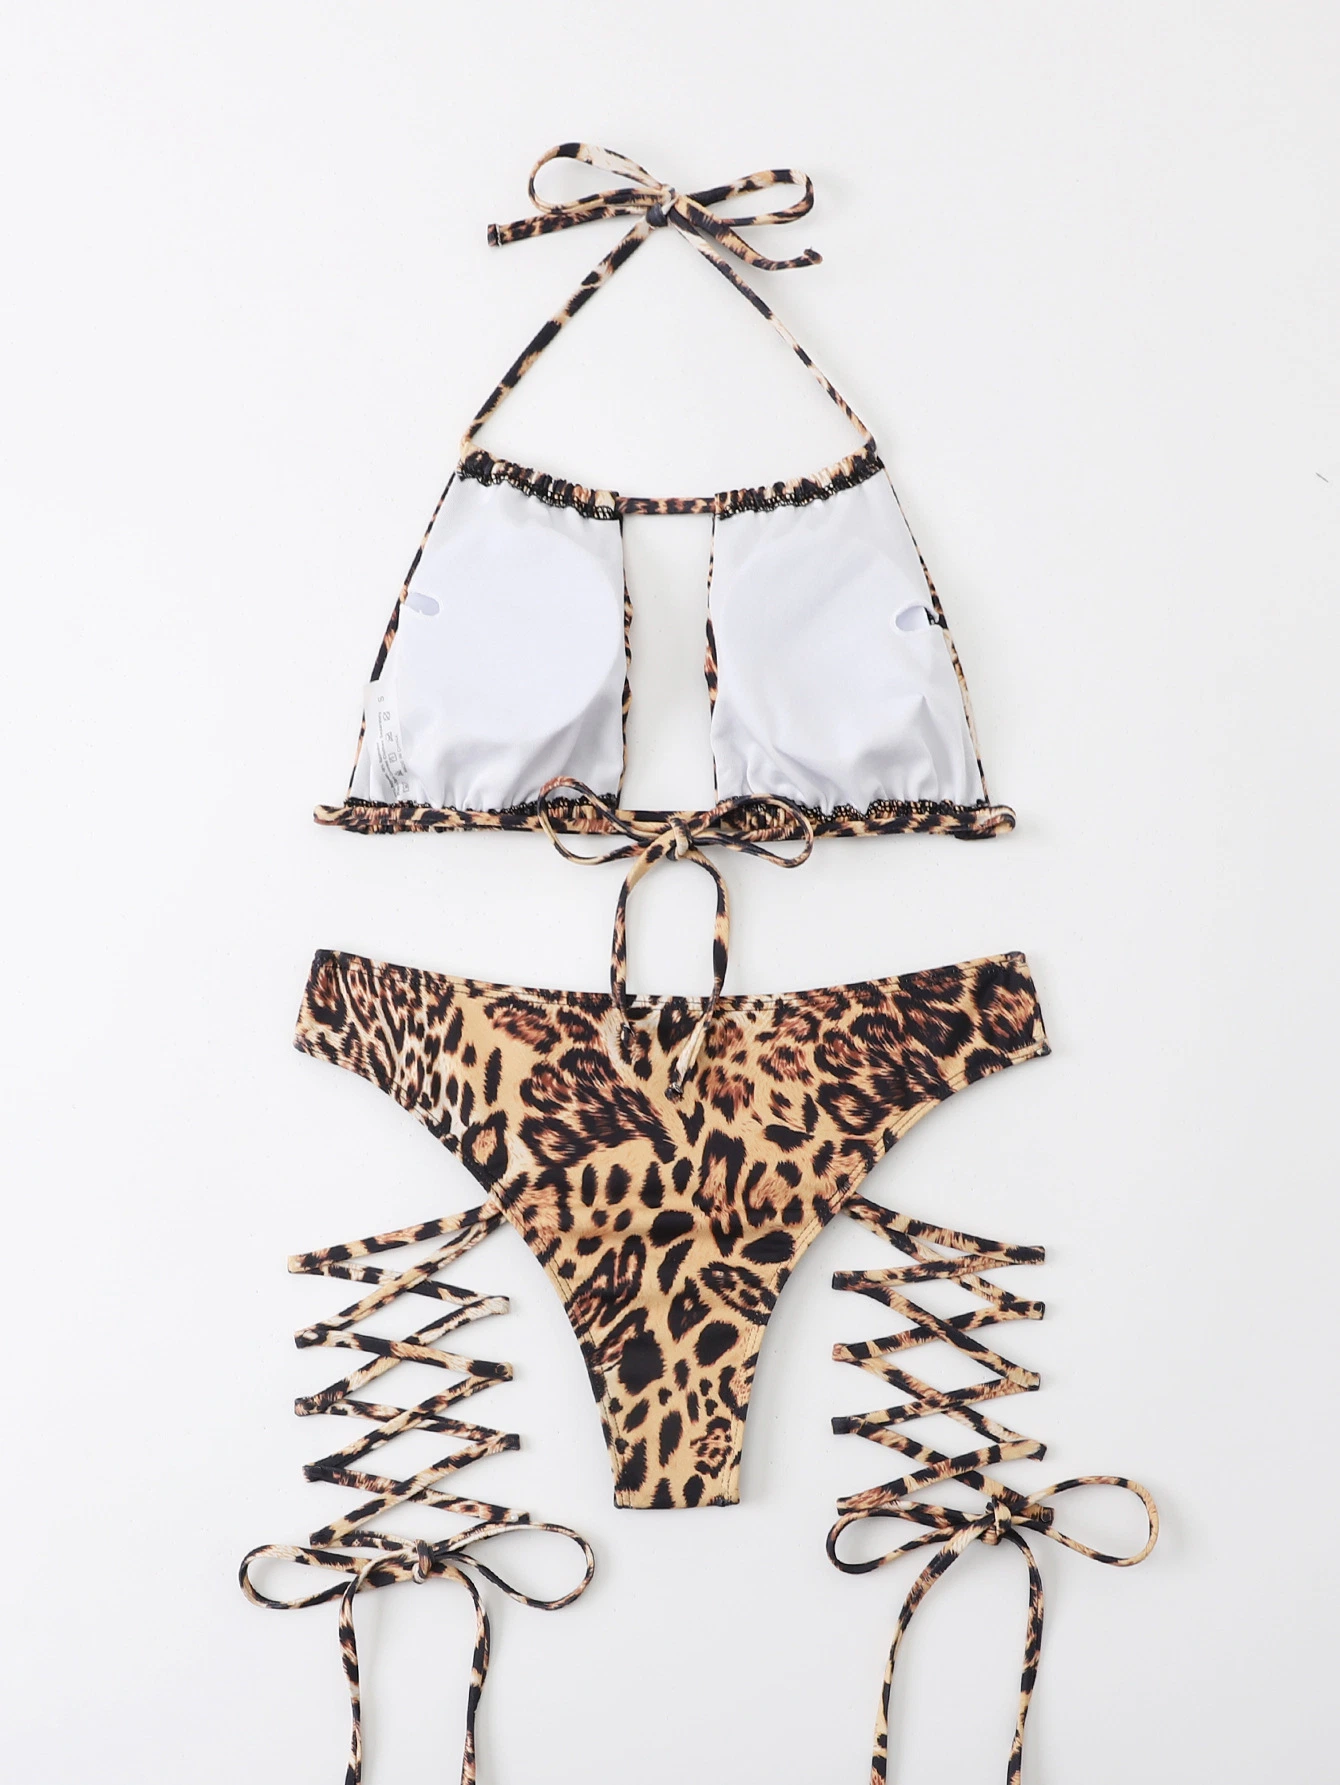 Leopard Print Бикини набор High Waist Thong Swimsuit Halter Women Одежда для плавания из двух частей